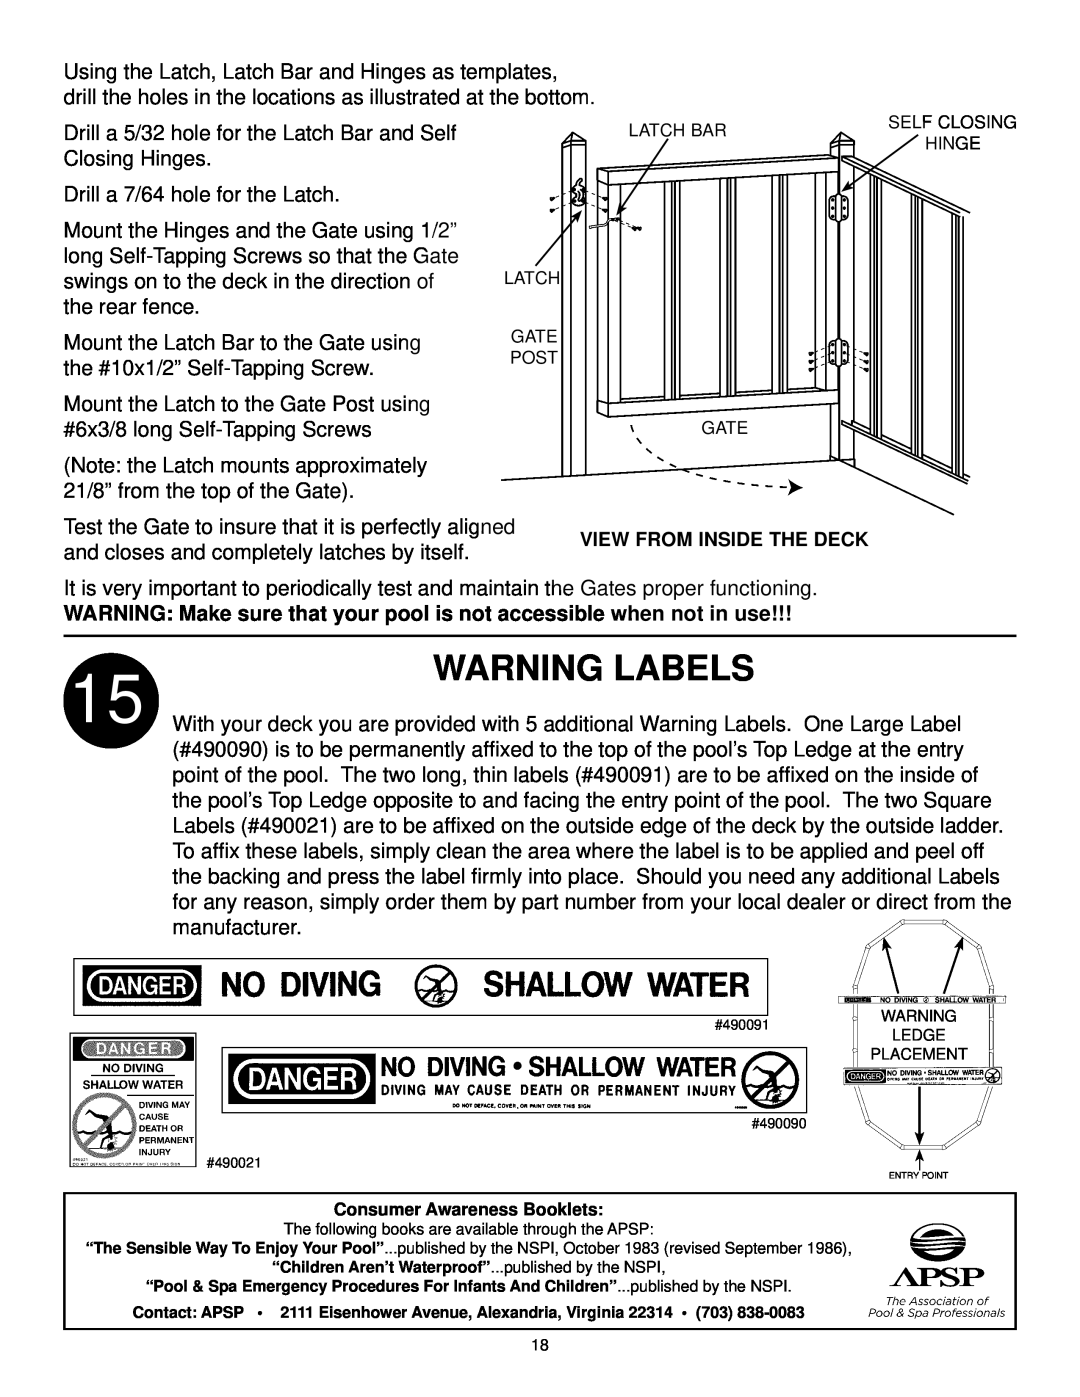 Swim'n Play end deck manual Warning Labels 